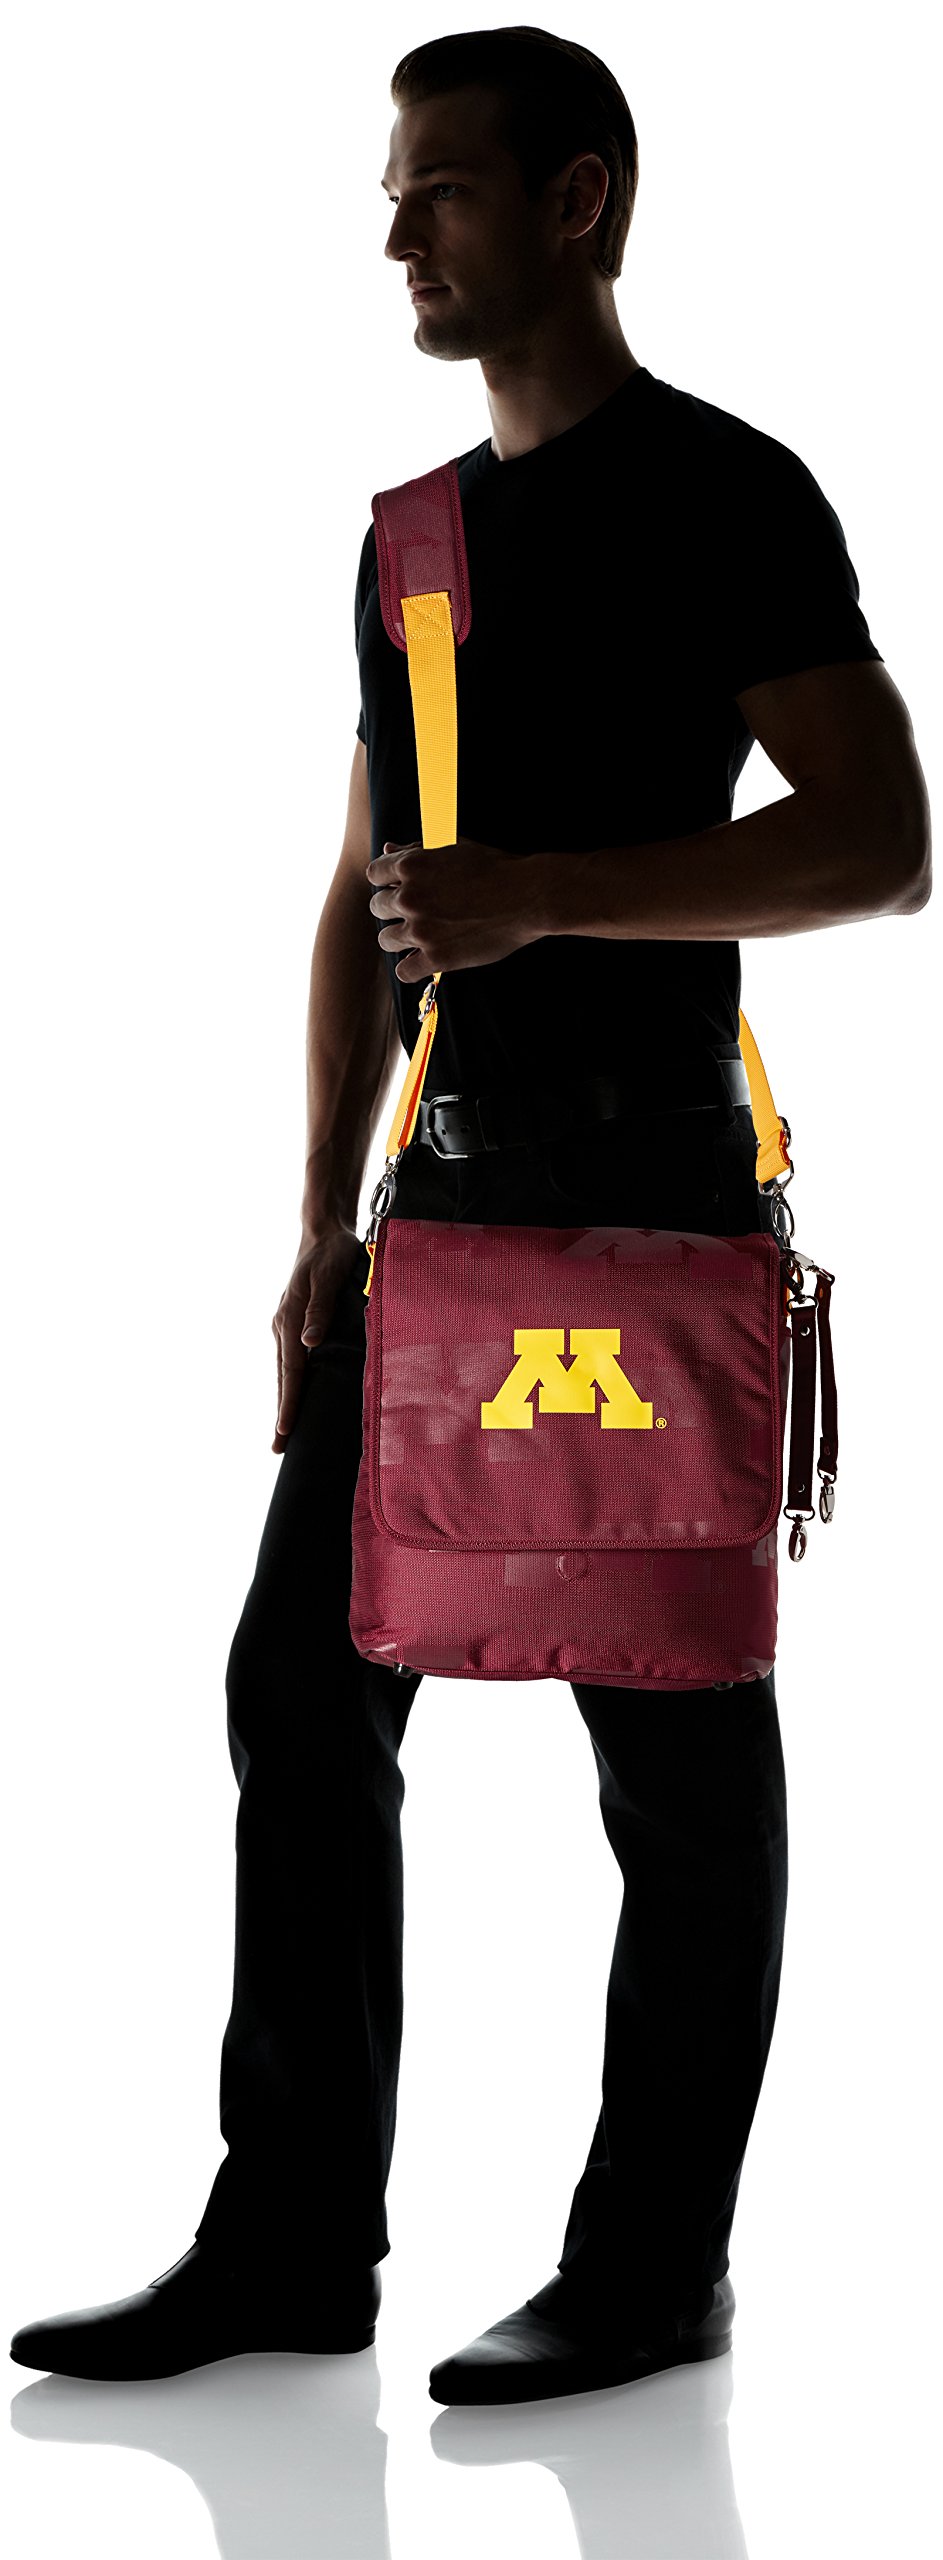 Minnesota Golden Gophers NCAA LilFan Diaper Messenger Bag - image 5 of 5